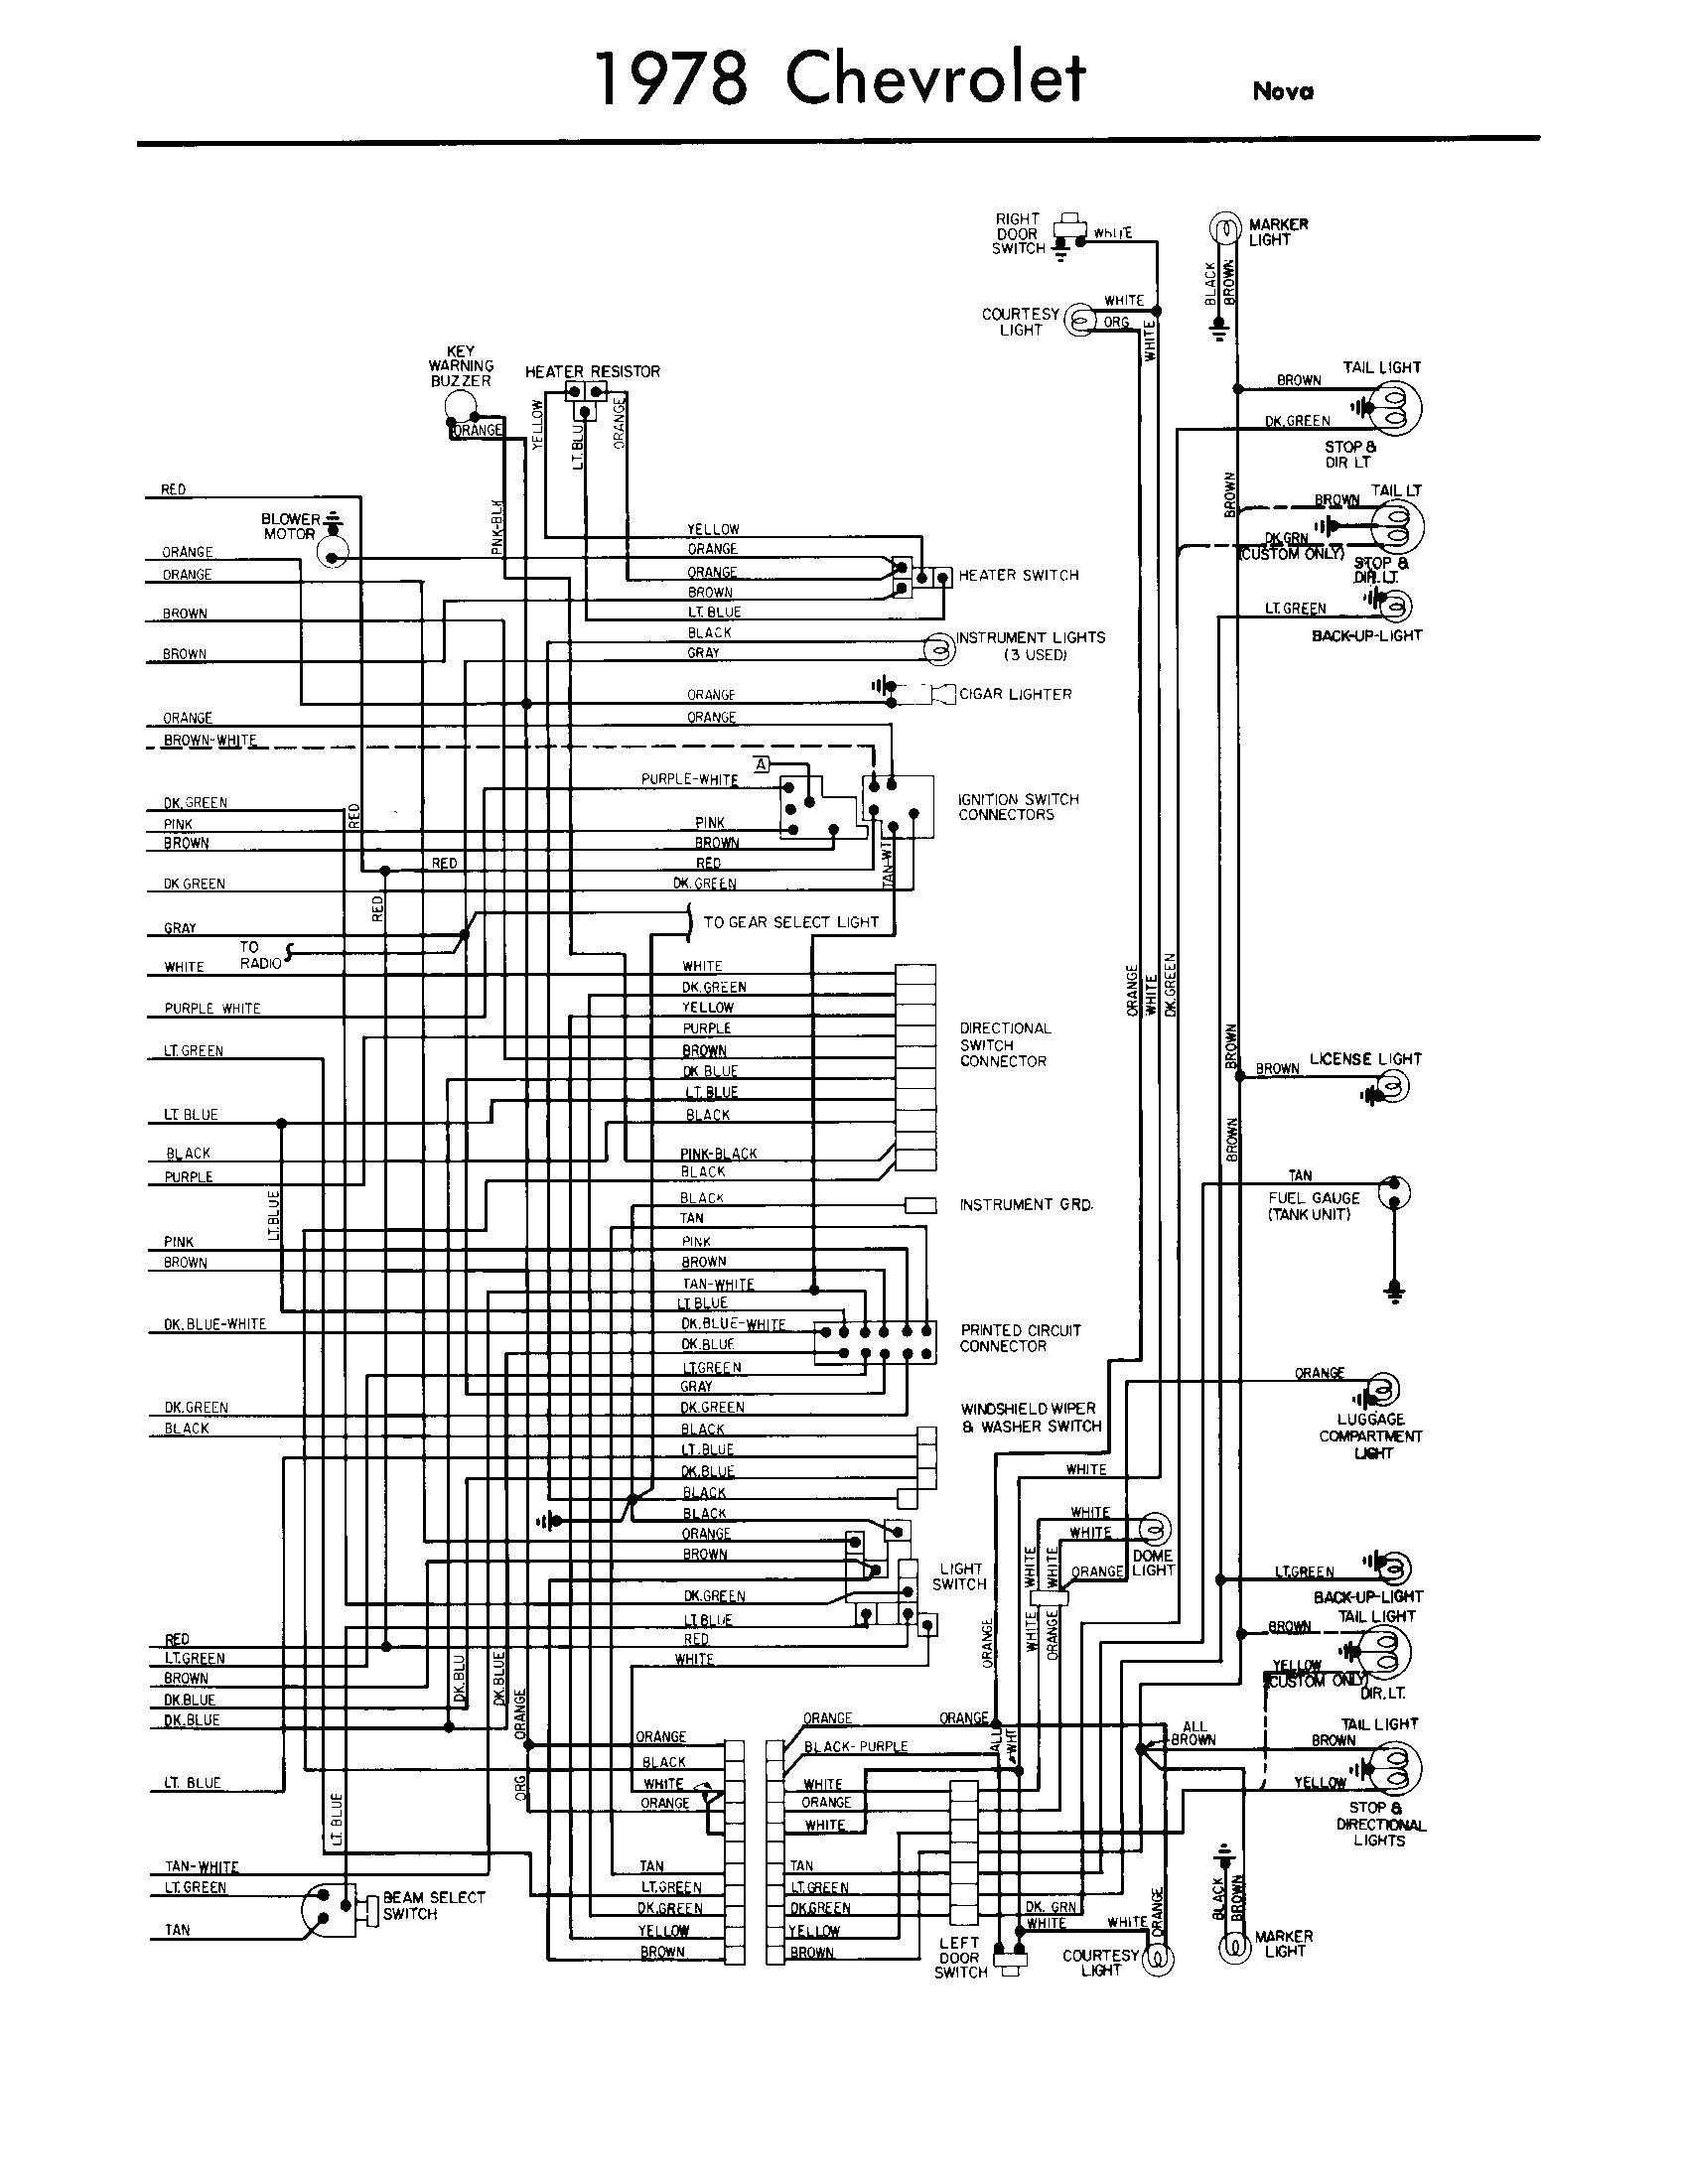 1978 peterbilt wiring backup lights schematic diagram 1978 peterbilt wiring backup lights